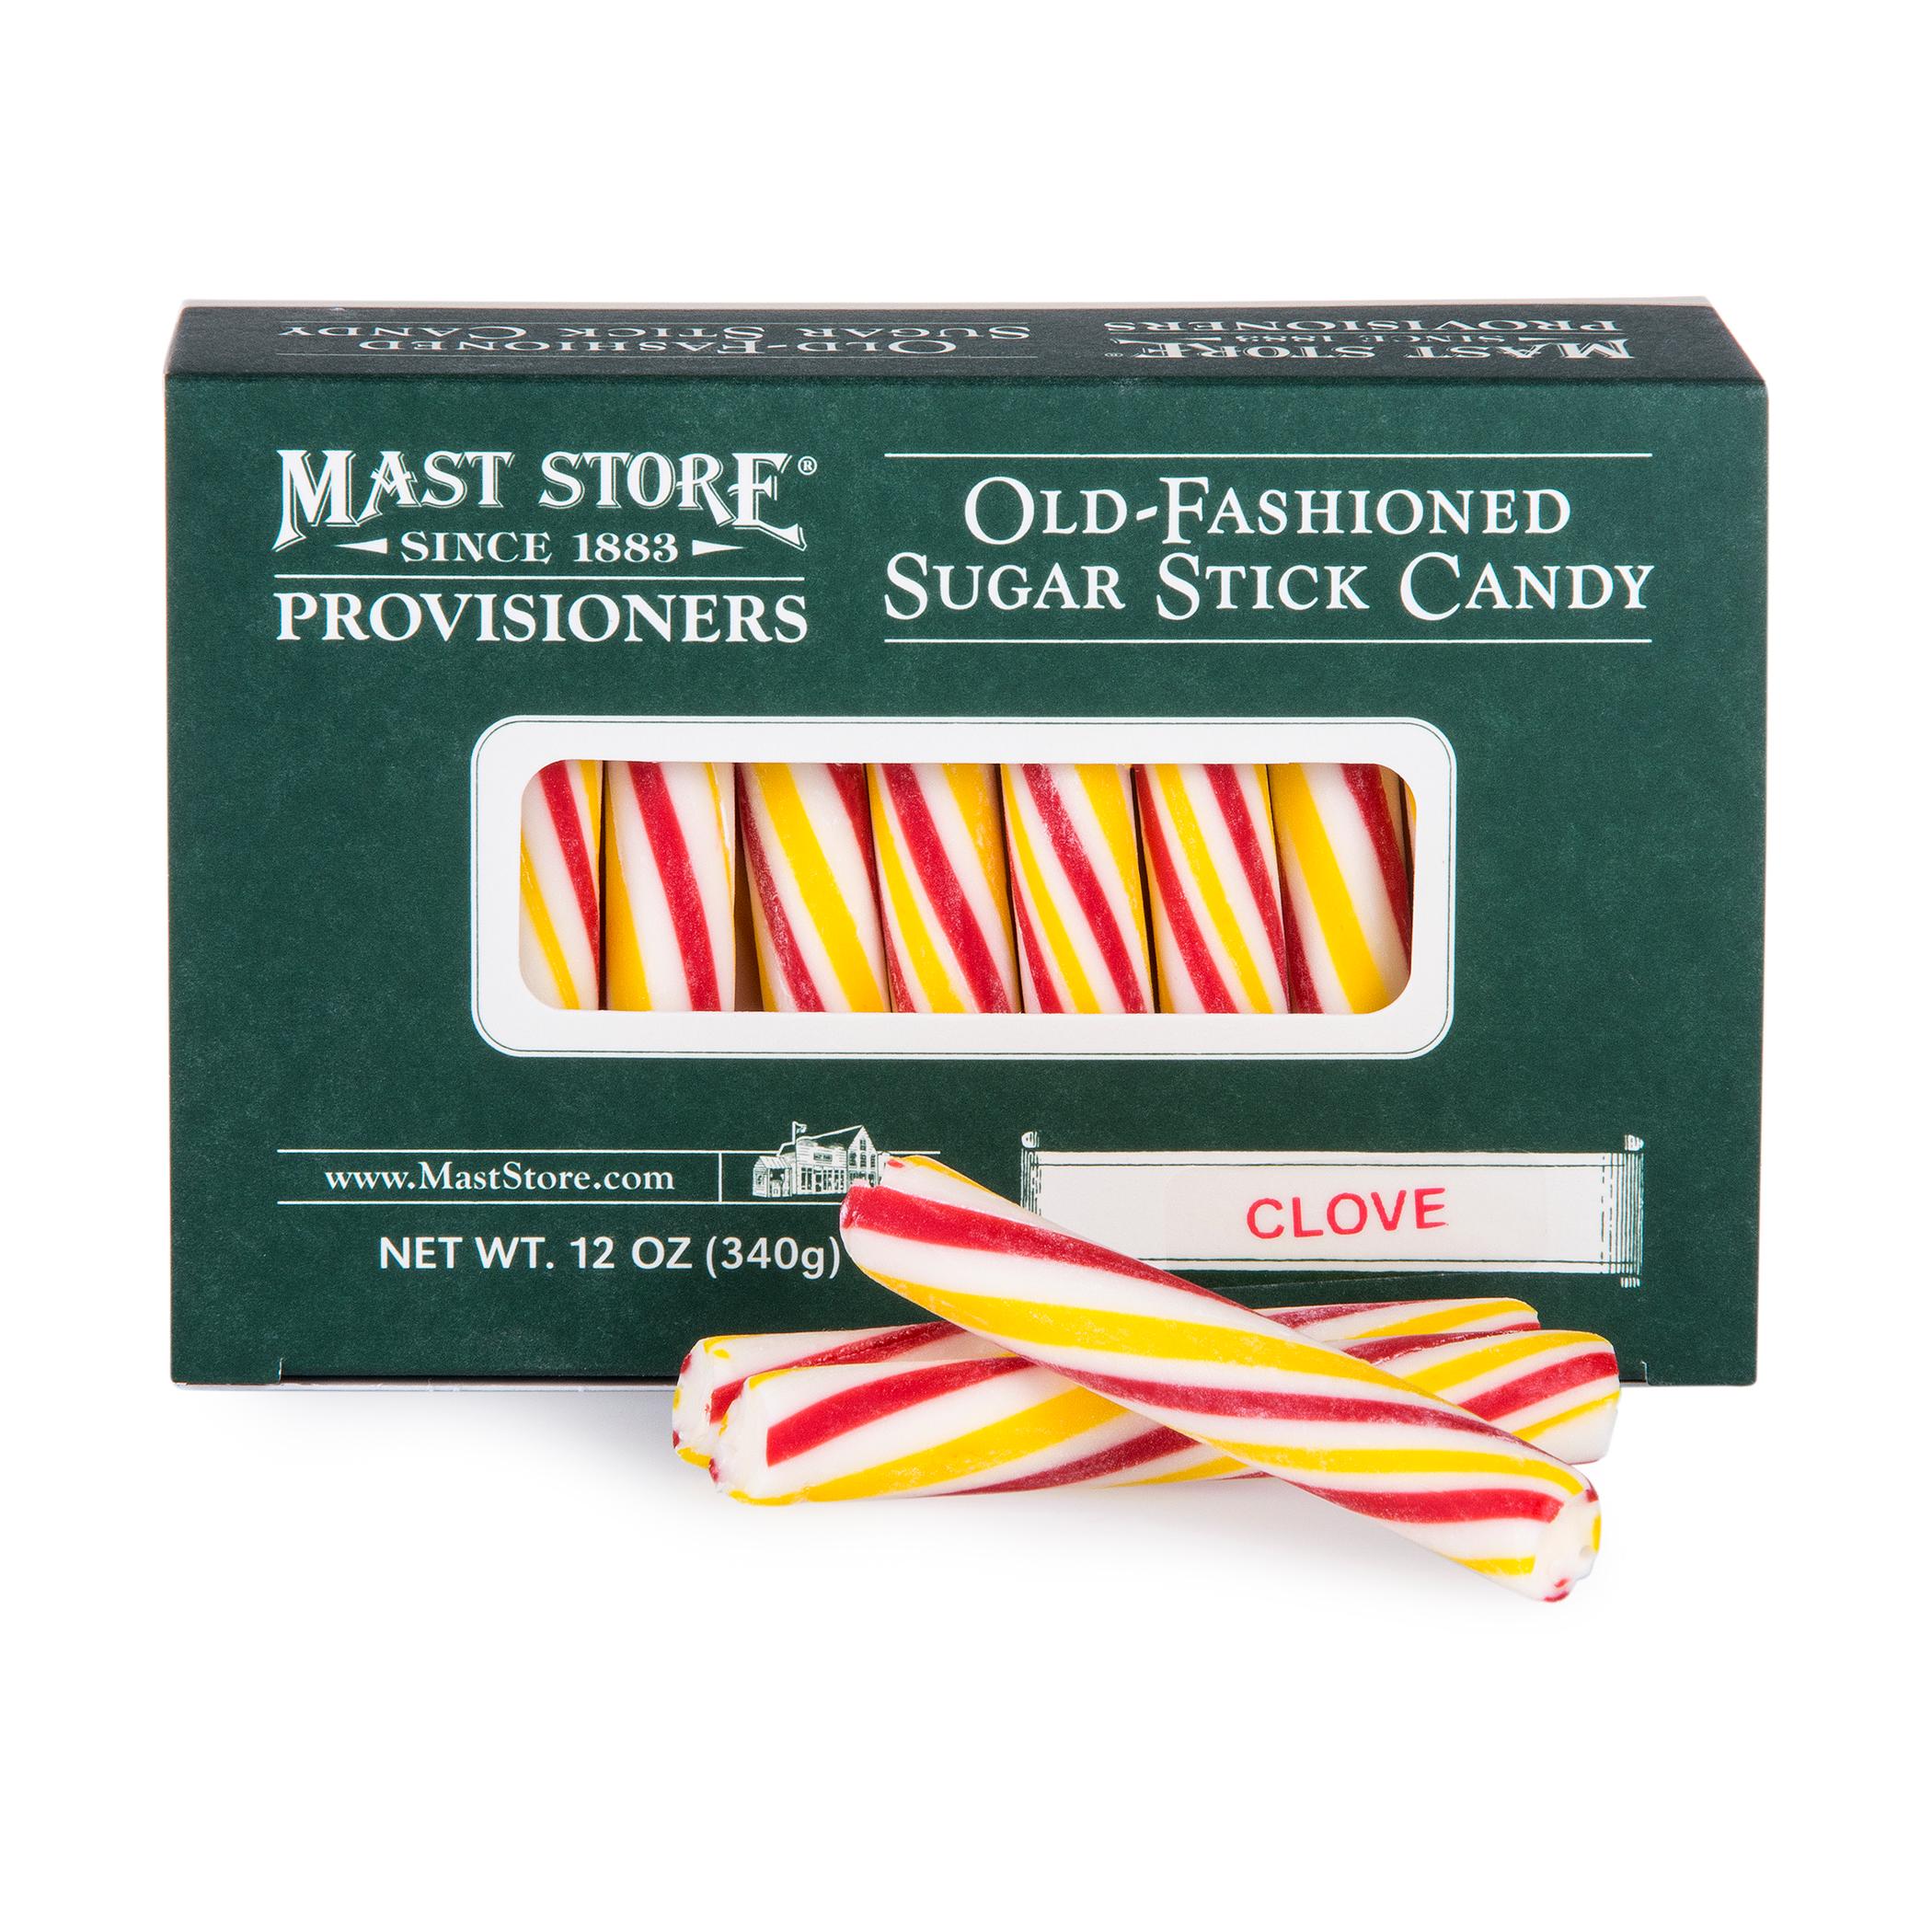  Mast Store Provisioners Clove OldFashioned Sugar Stick